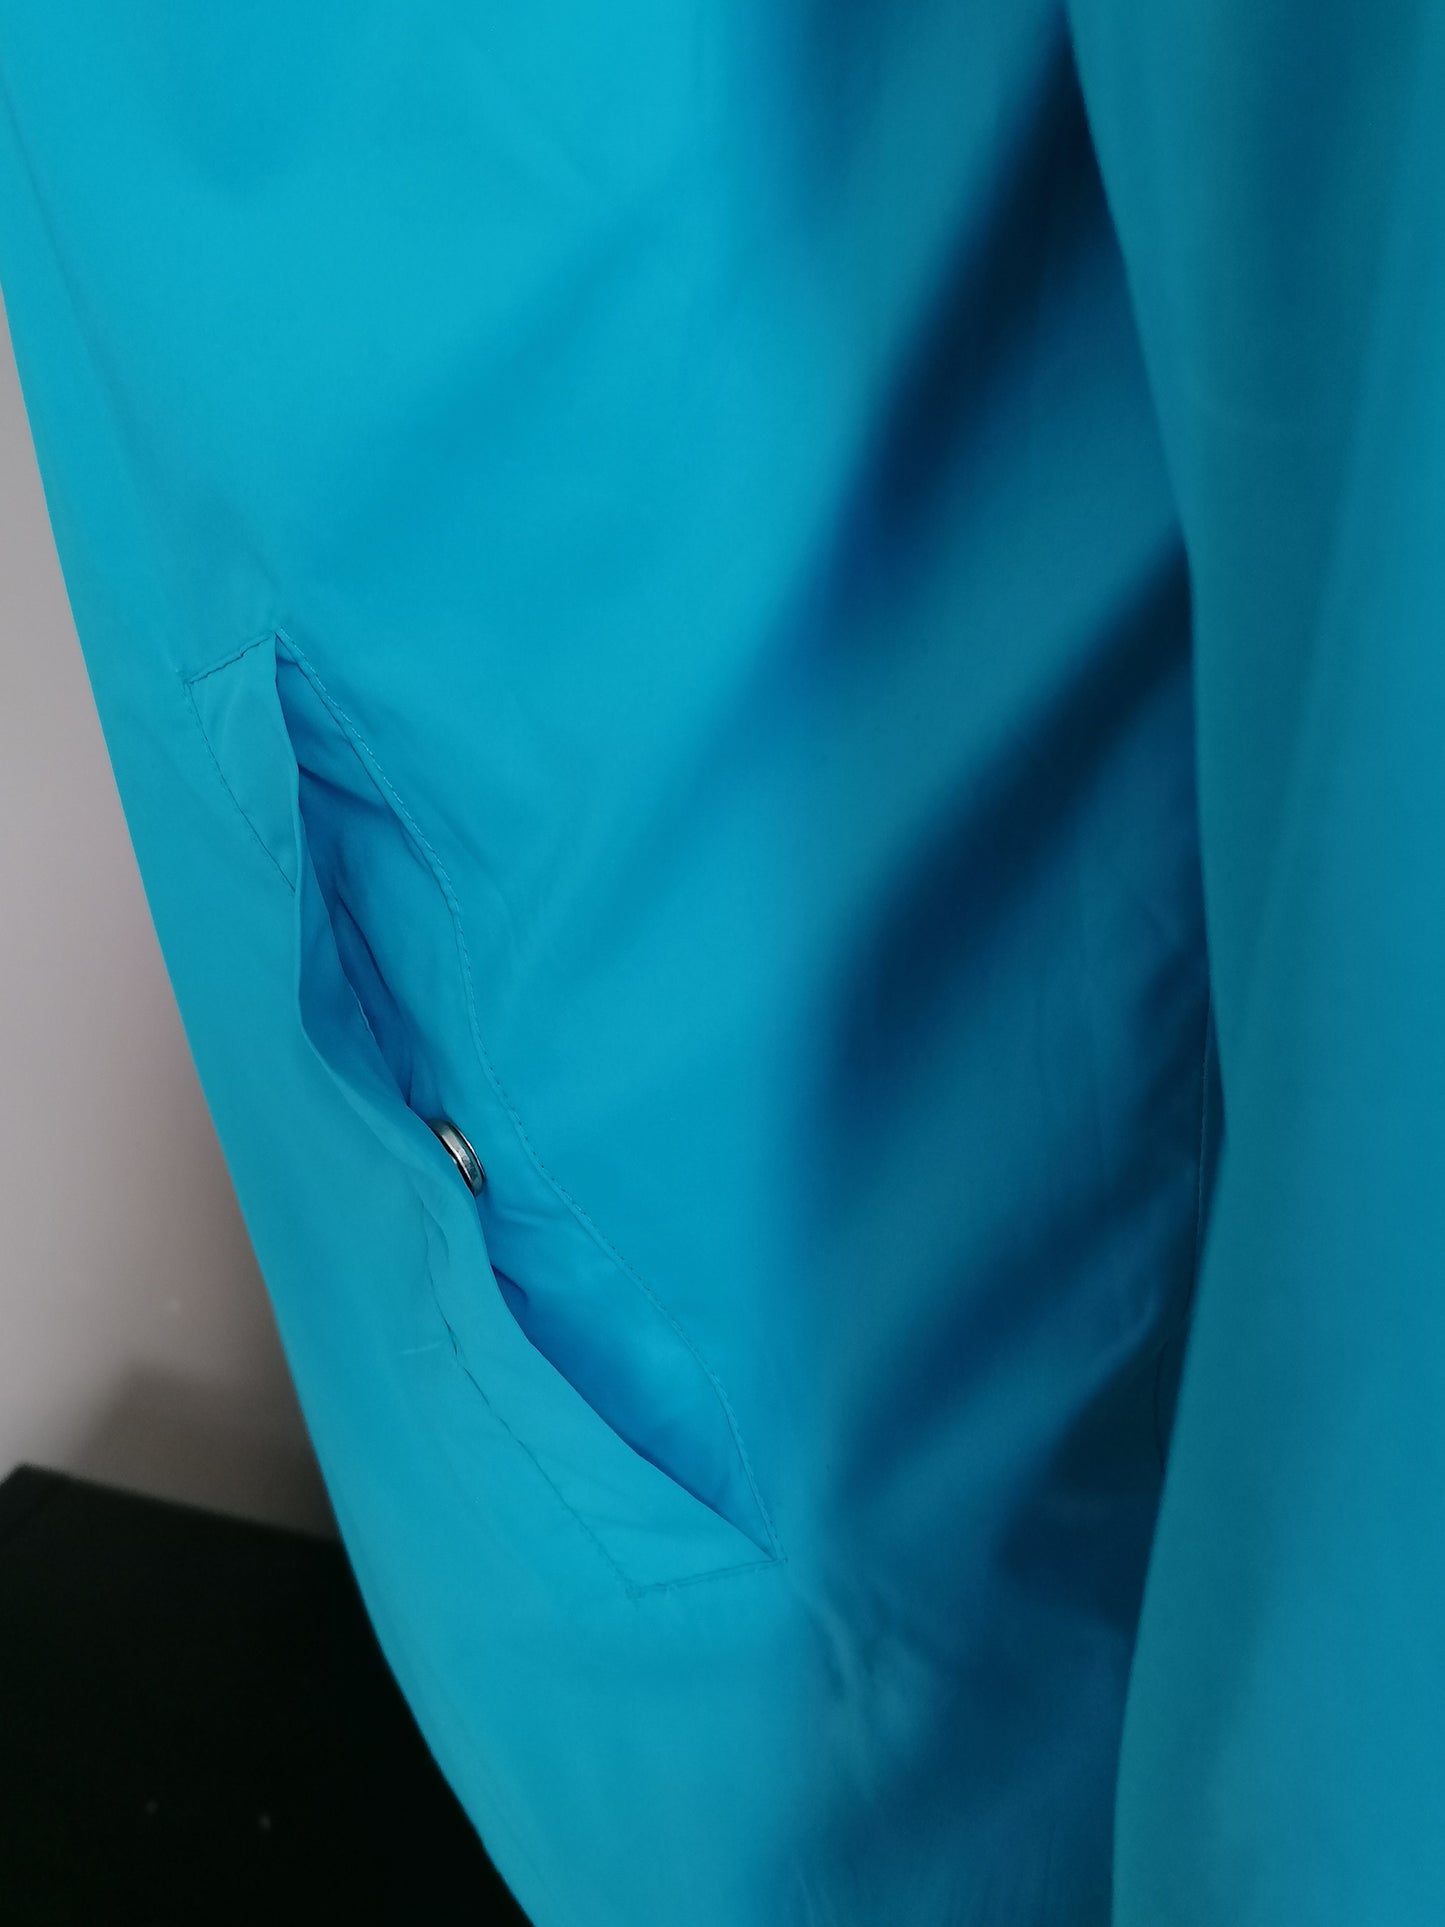 Brian Dales Chaqueta de verano de doble llagación / reversible con capucha. Marrón o azul. Tamaño 50 / M.